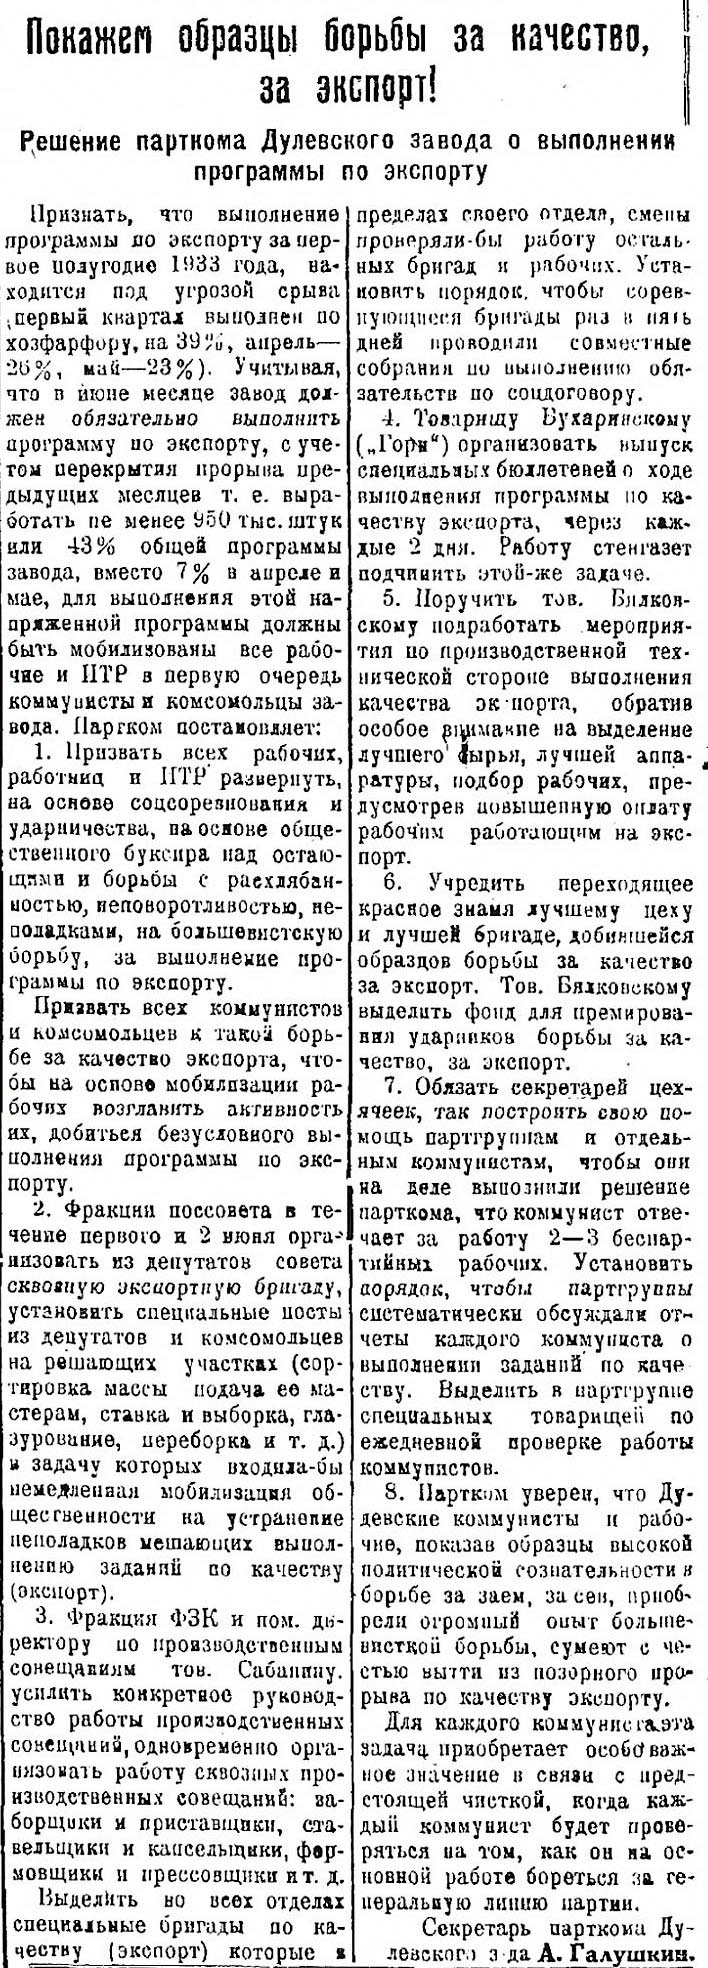 Заводская газета «Горн», 16.6.1933